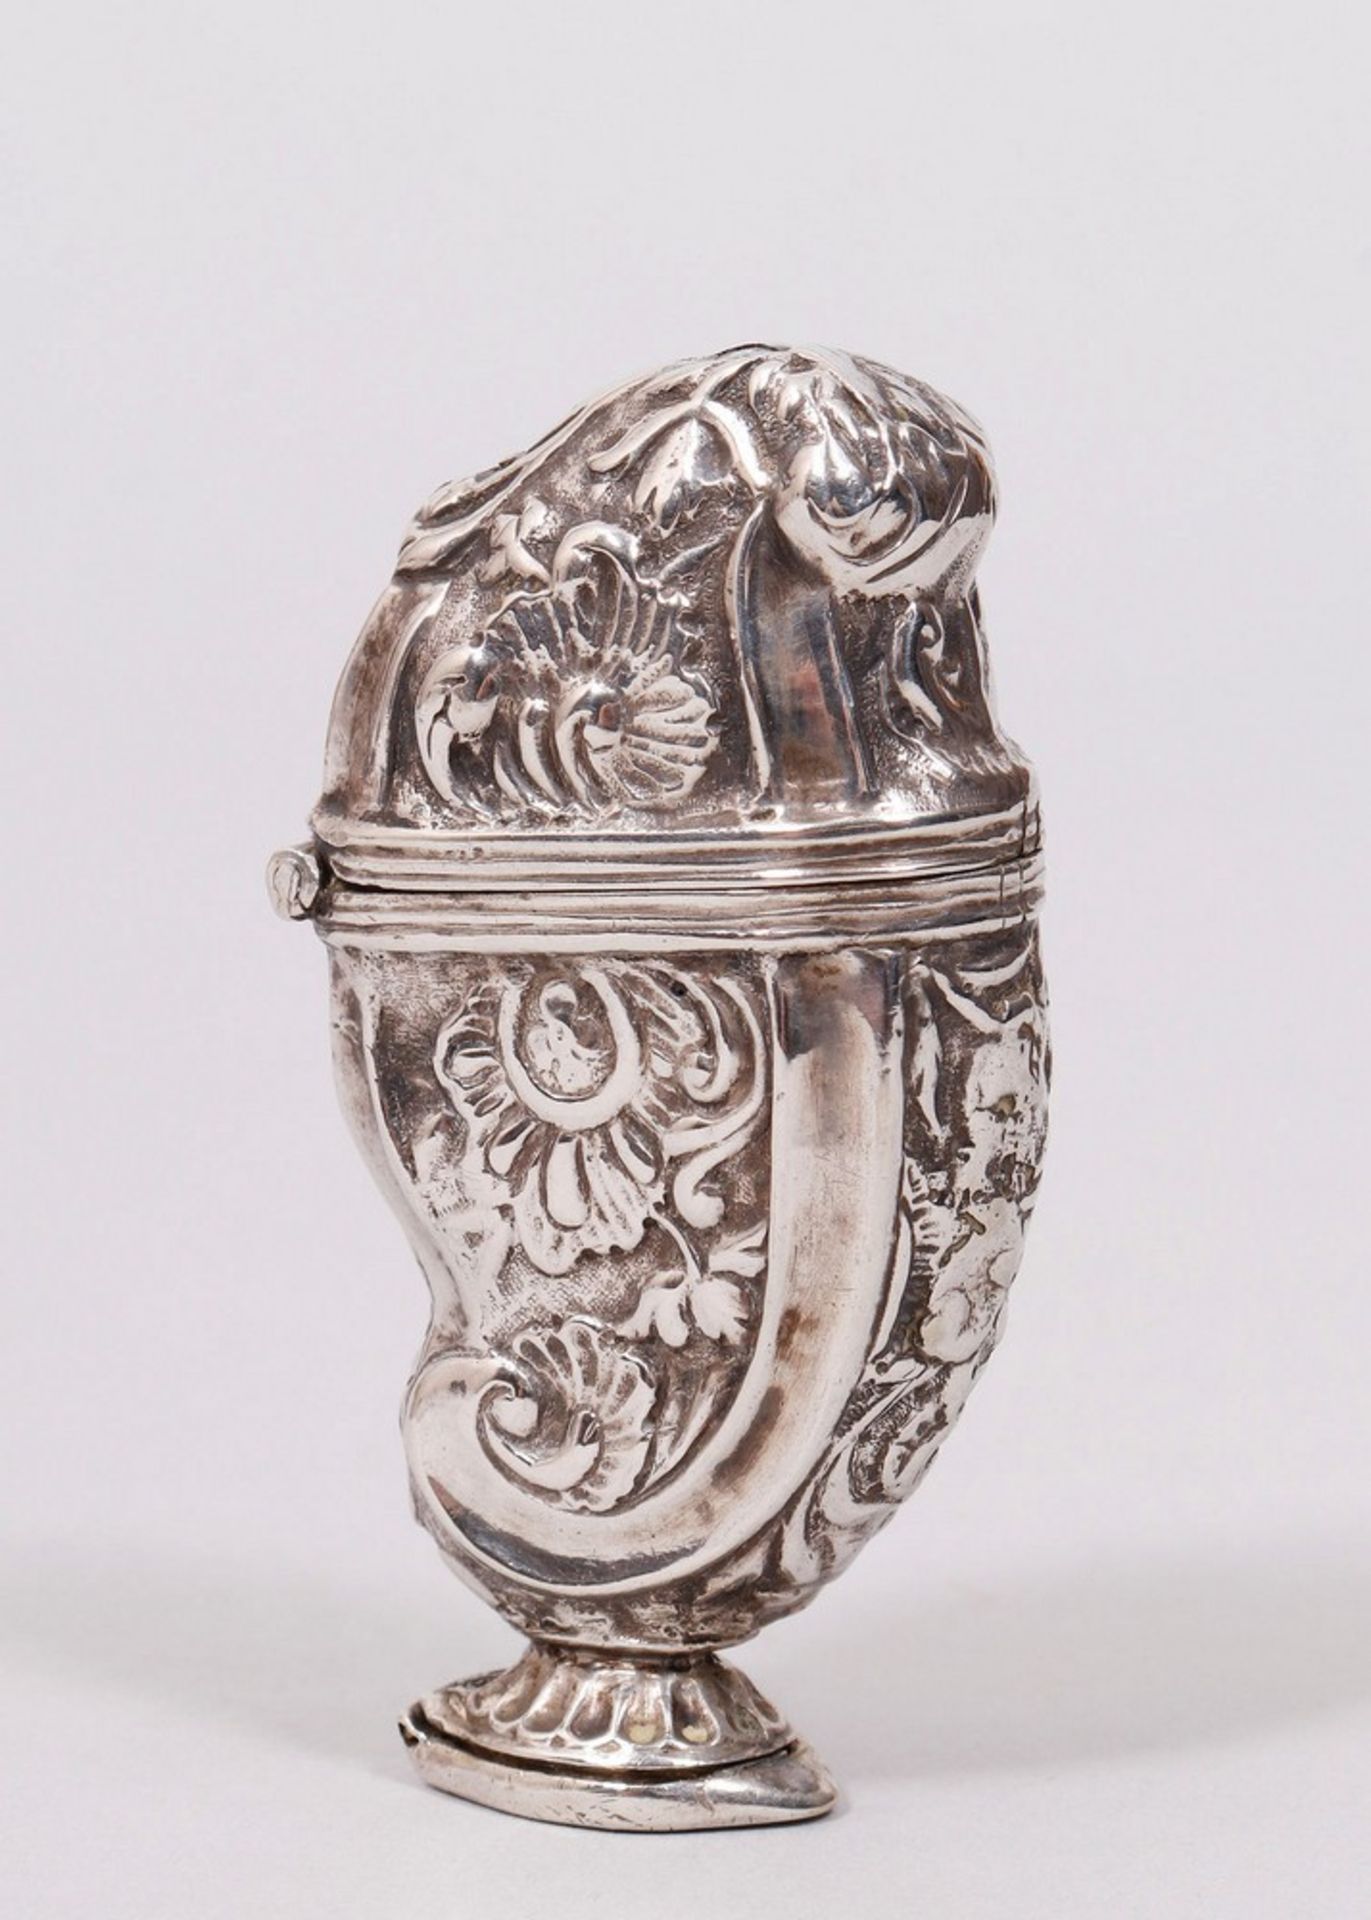 Small Baroque smelling box, 925 silver, partially gilt, probably German, c. 1747